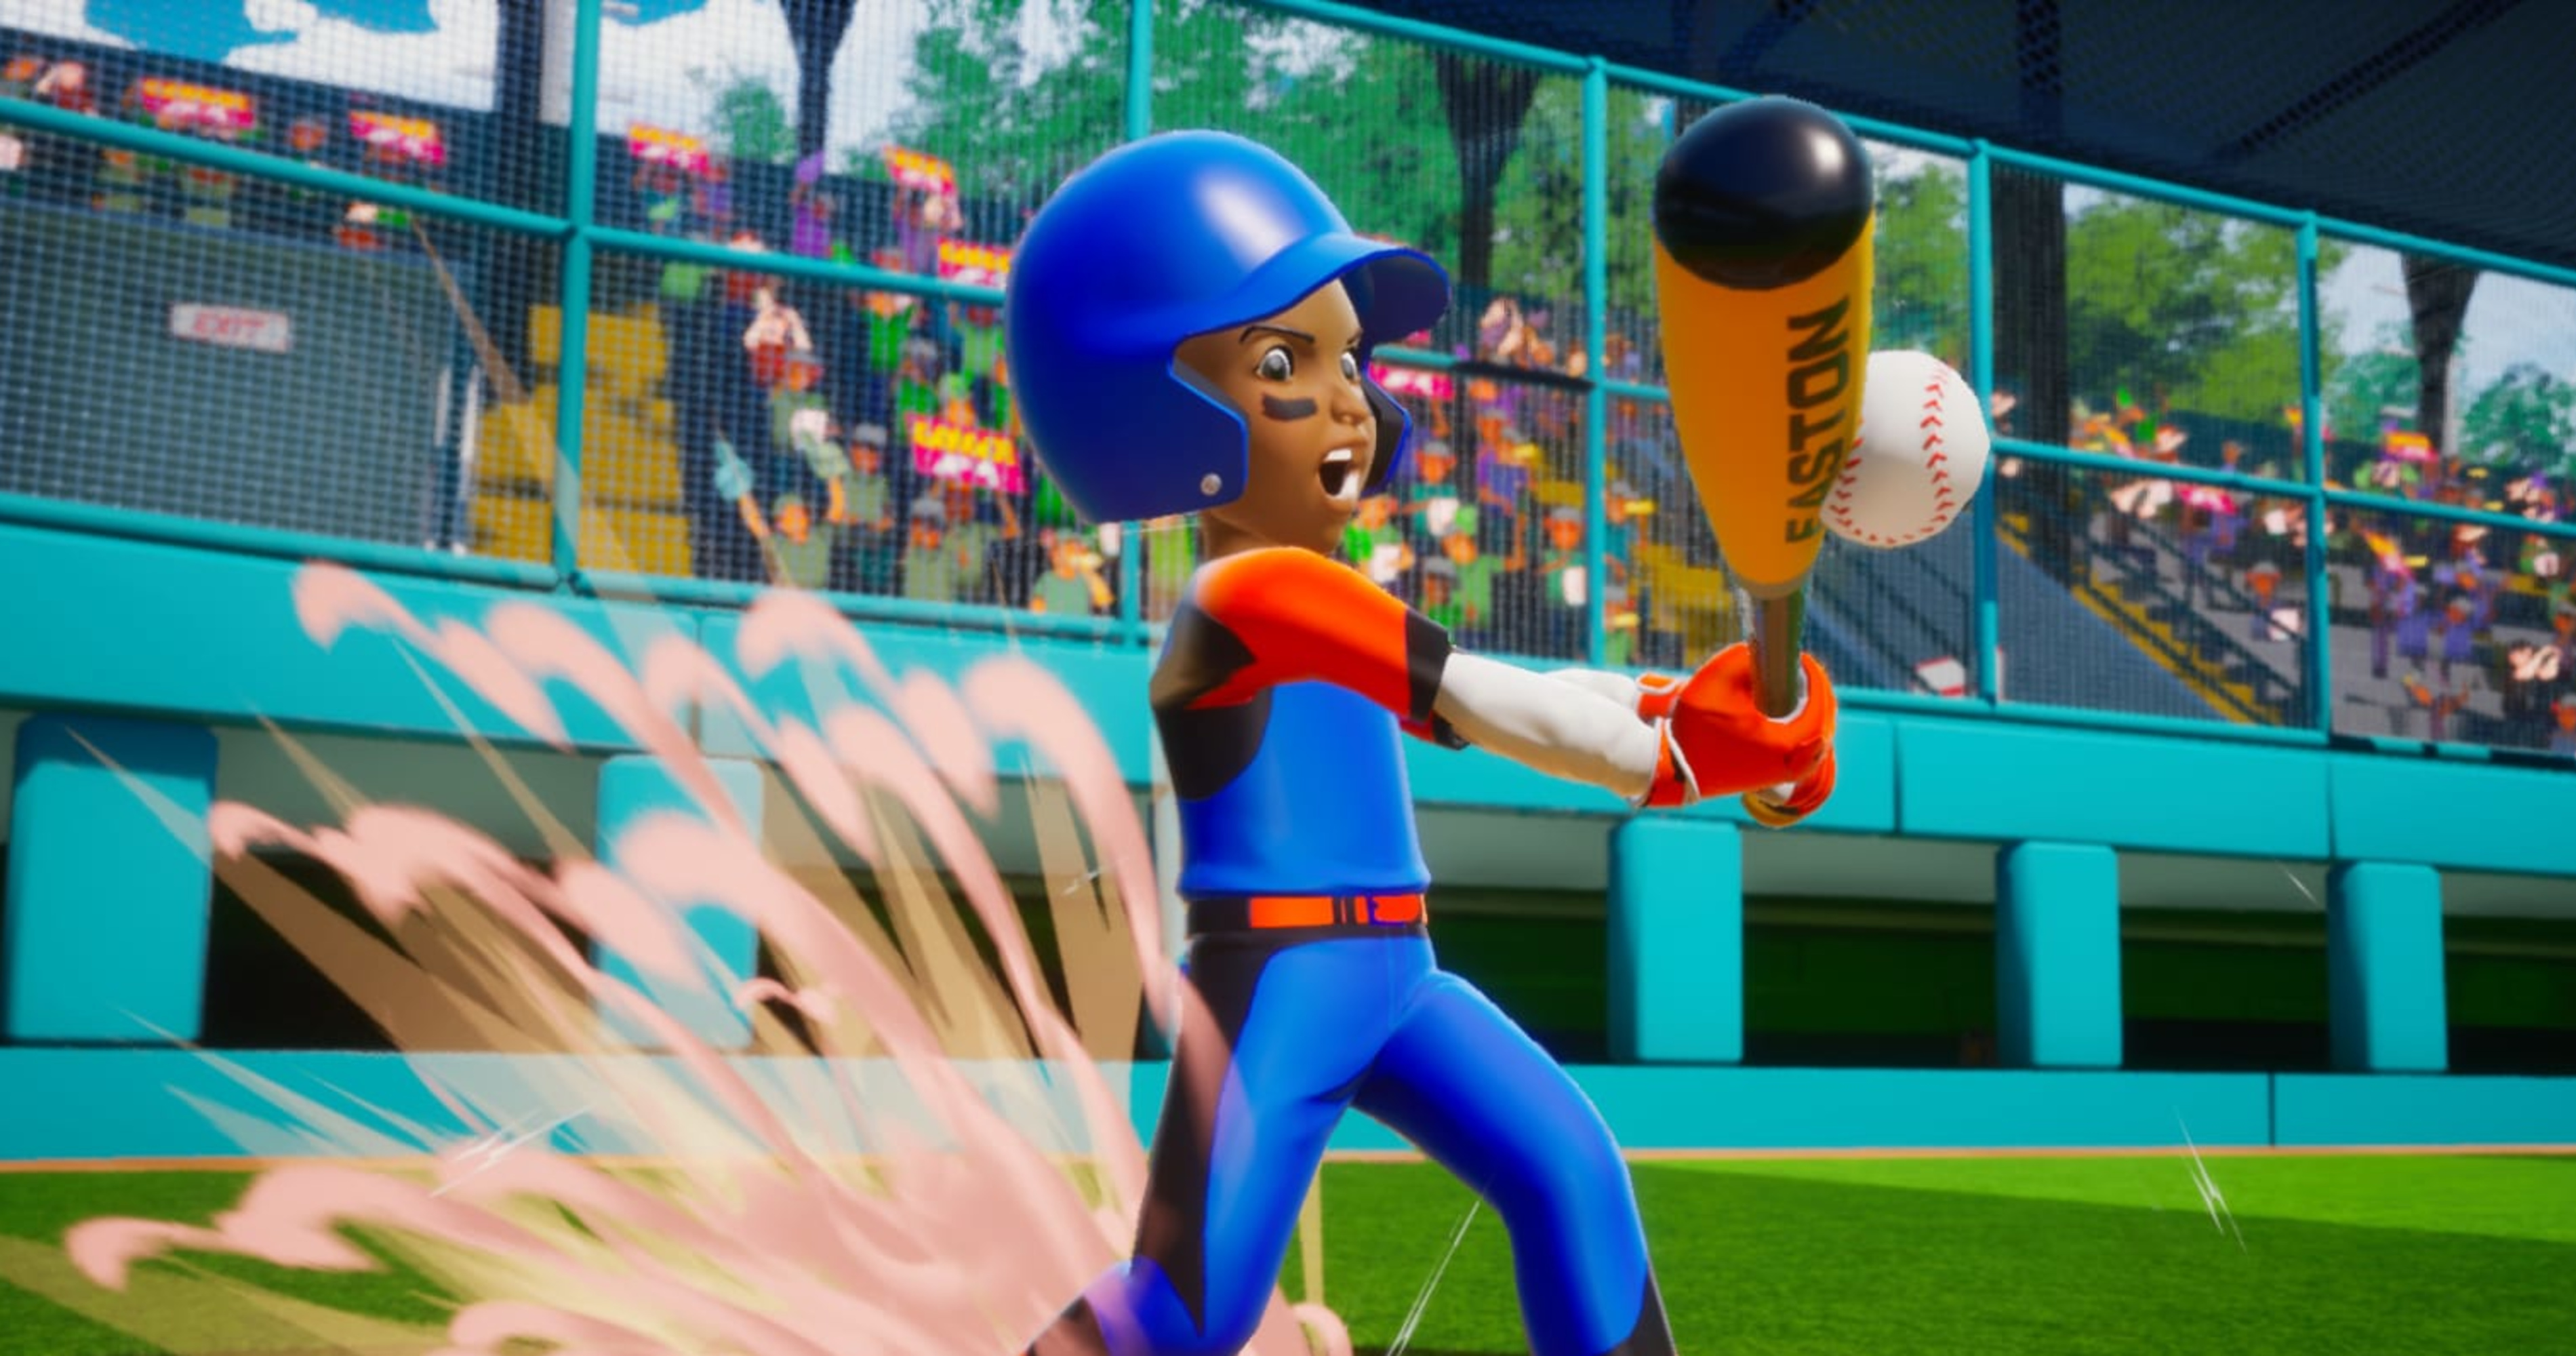 Little League World Series Baseball 2022 for Nintendo Switch